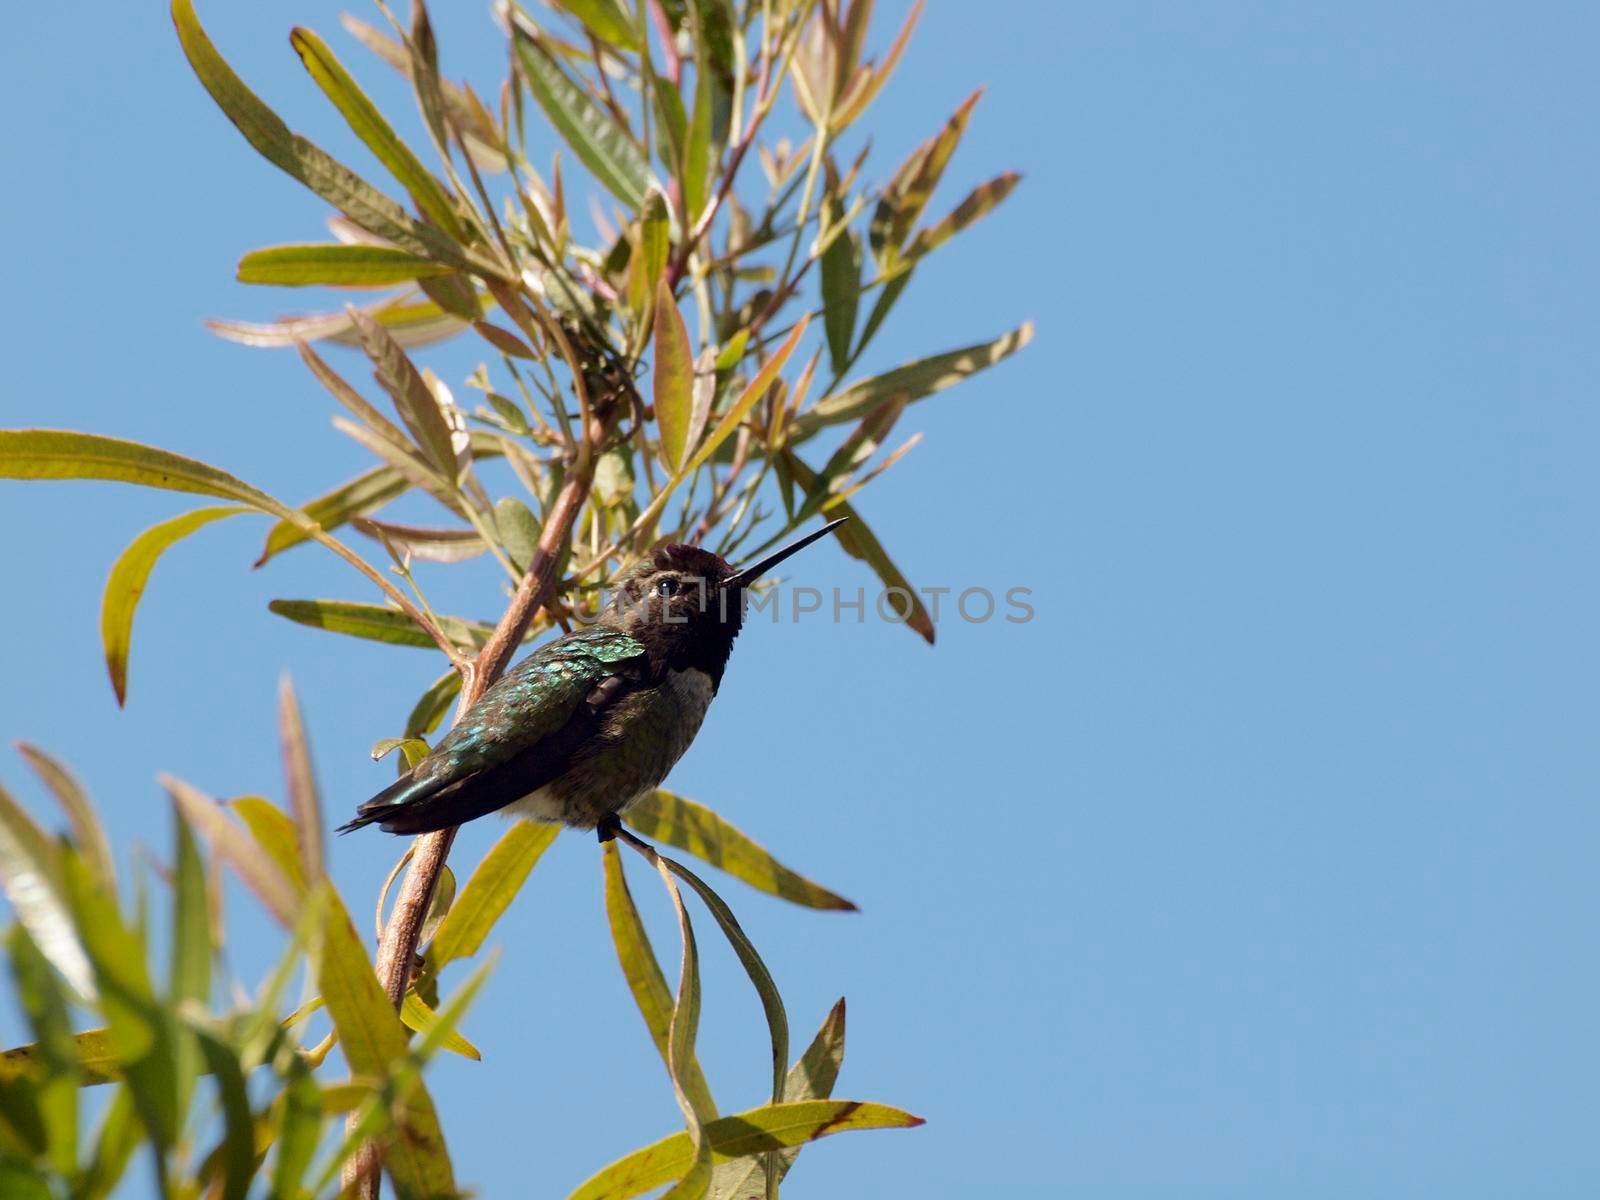 Humming Bird in Tree Branch by EricGBVD